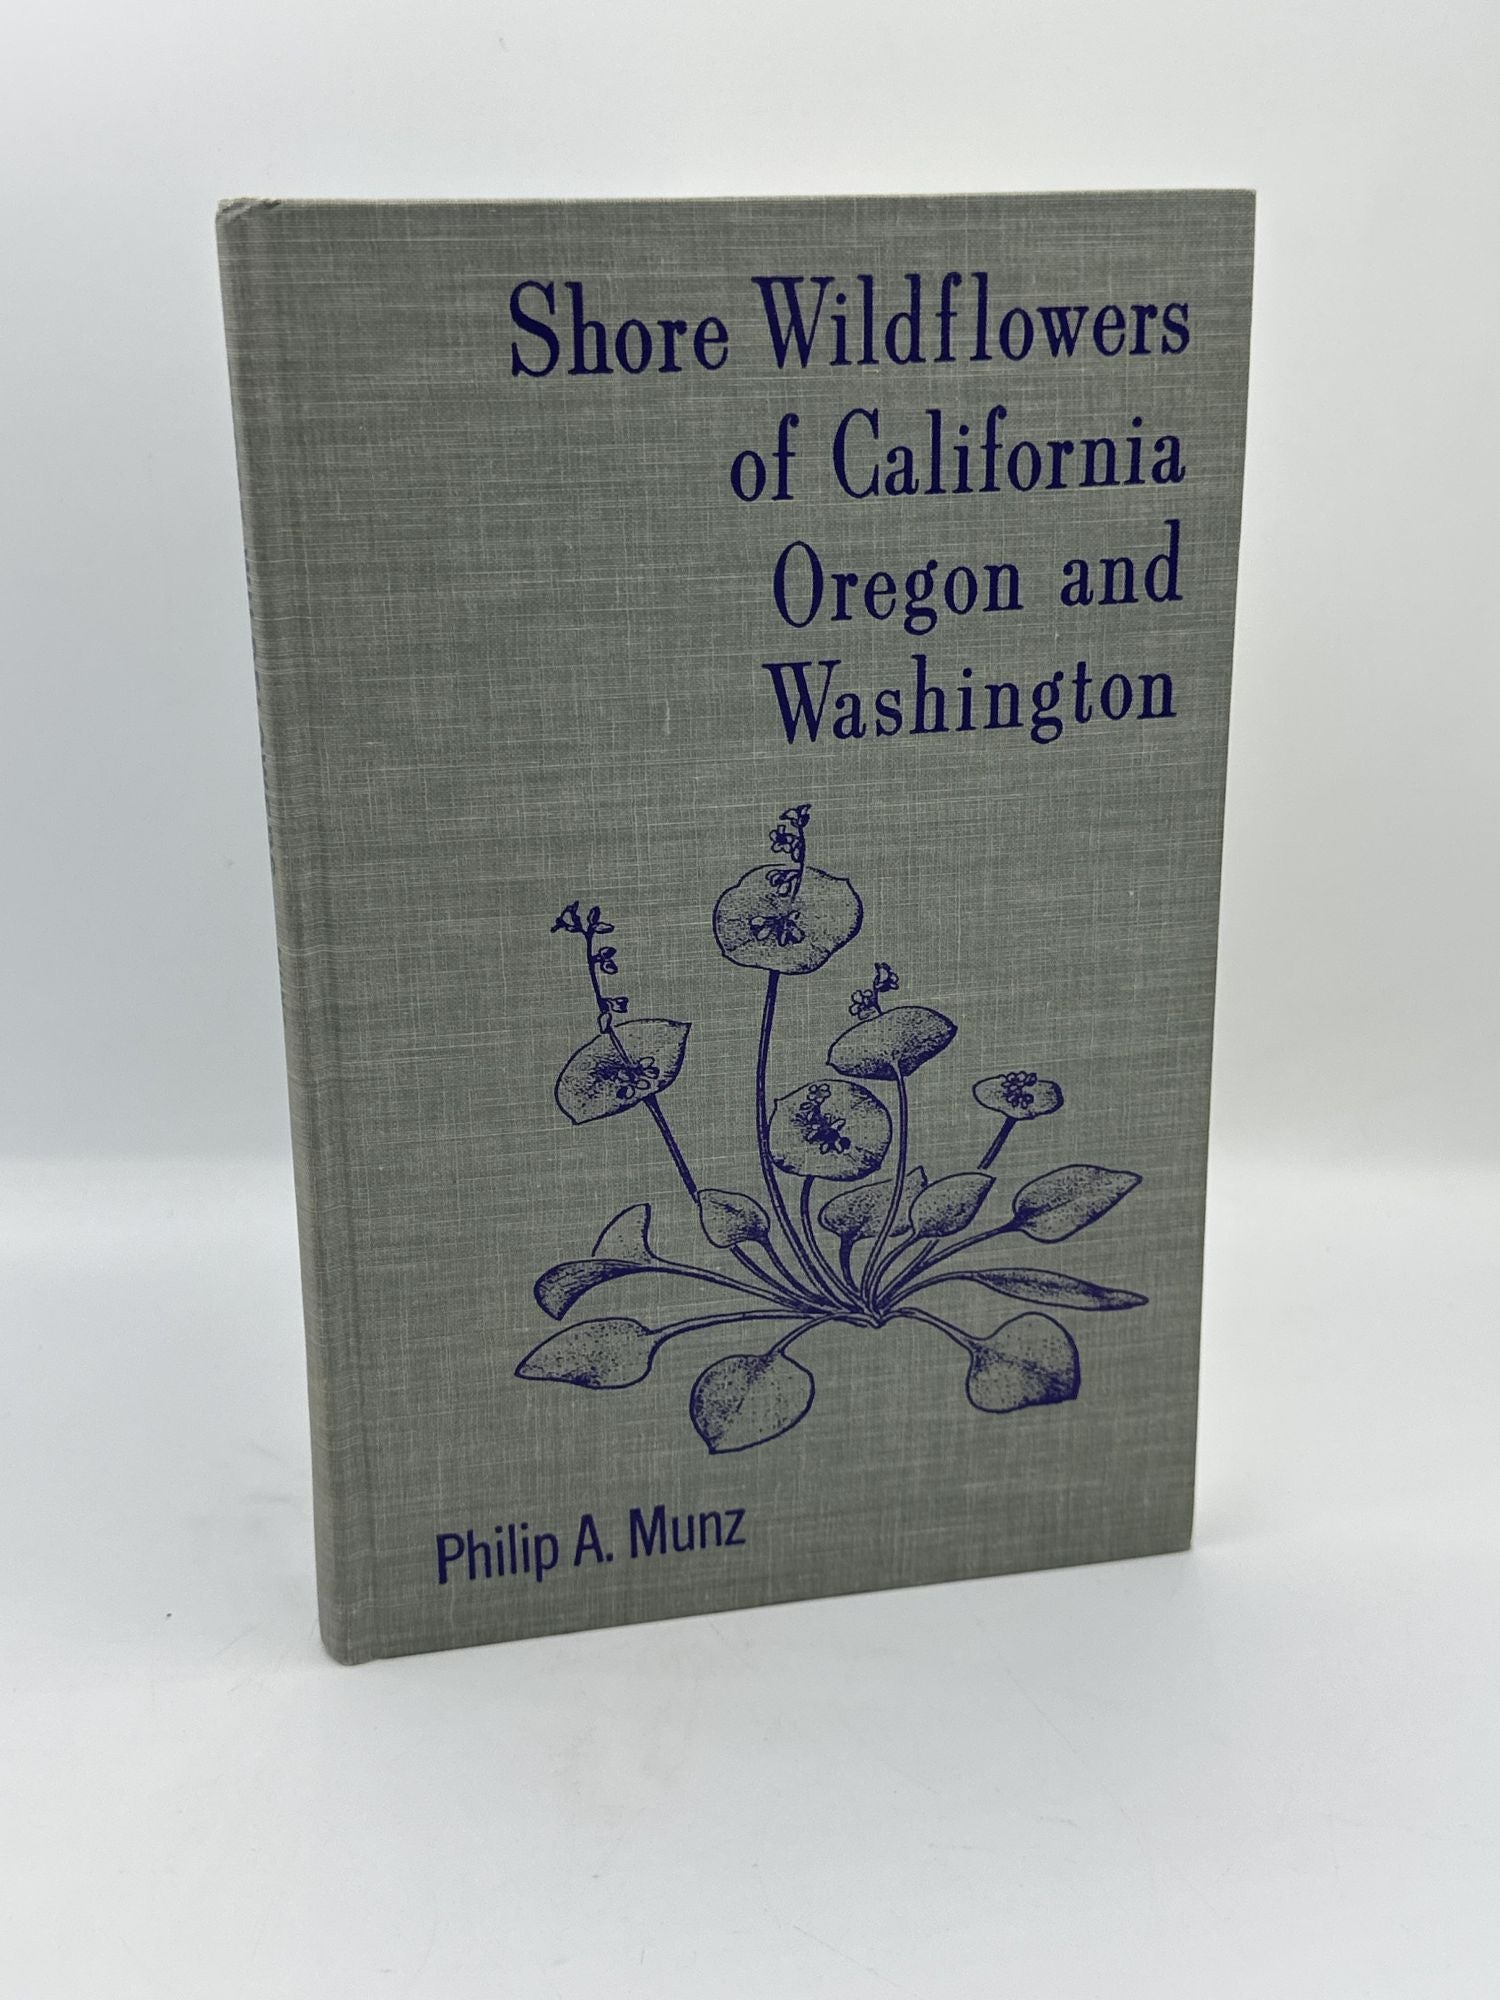 Shore Wildflowers of California, Oregon and Washington. Phillip A. Munz.